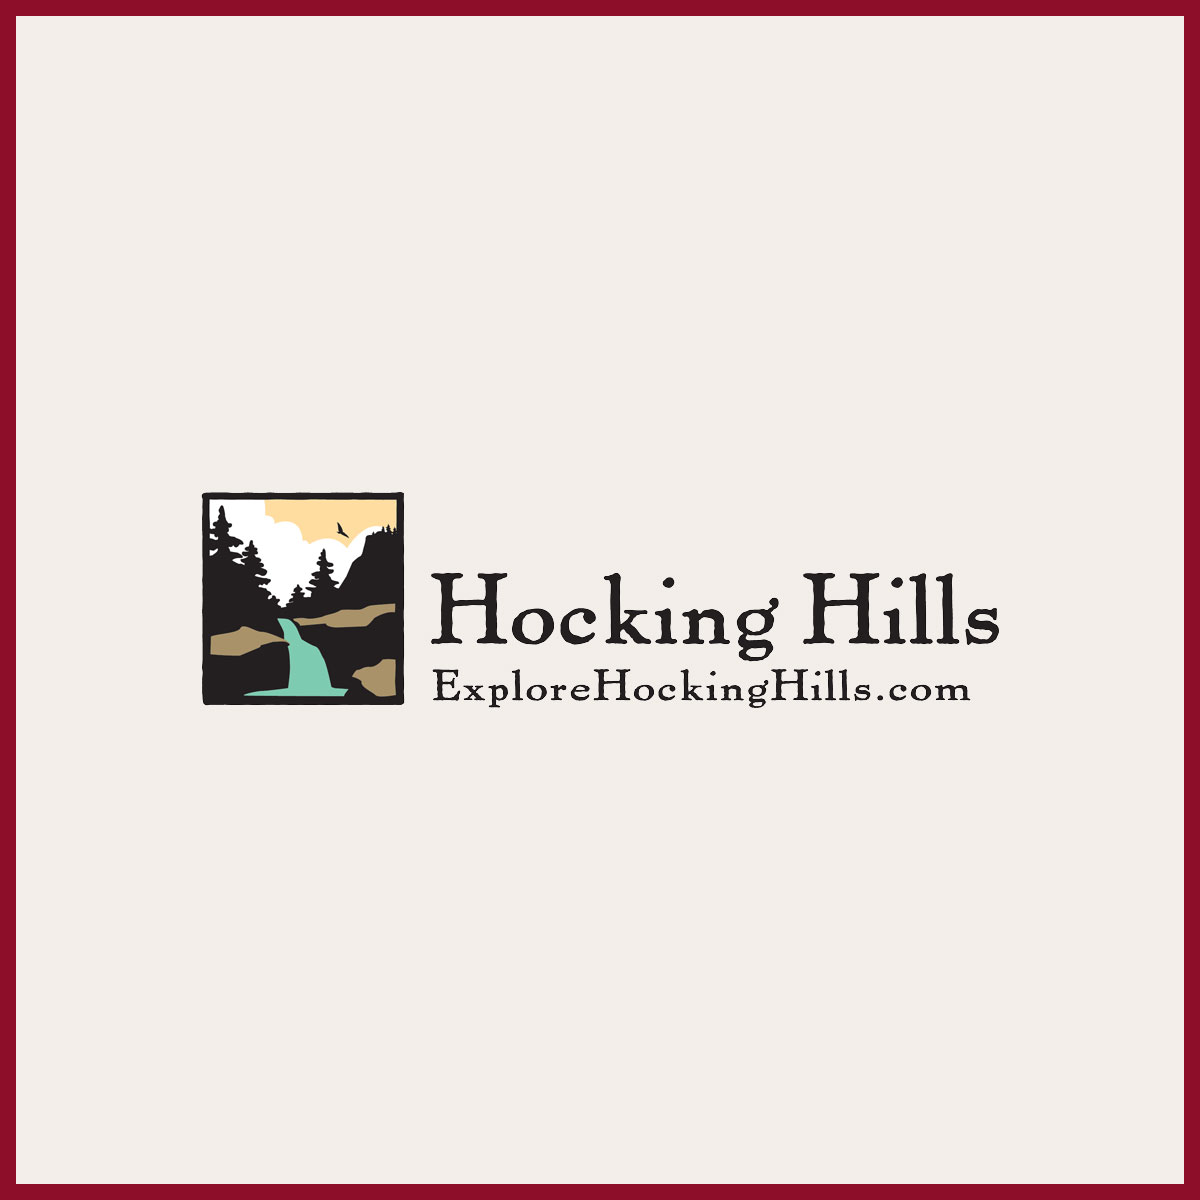 Hocking Hills Canoe Livery